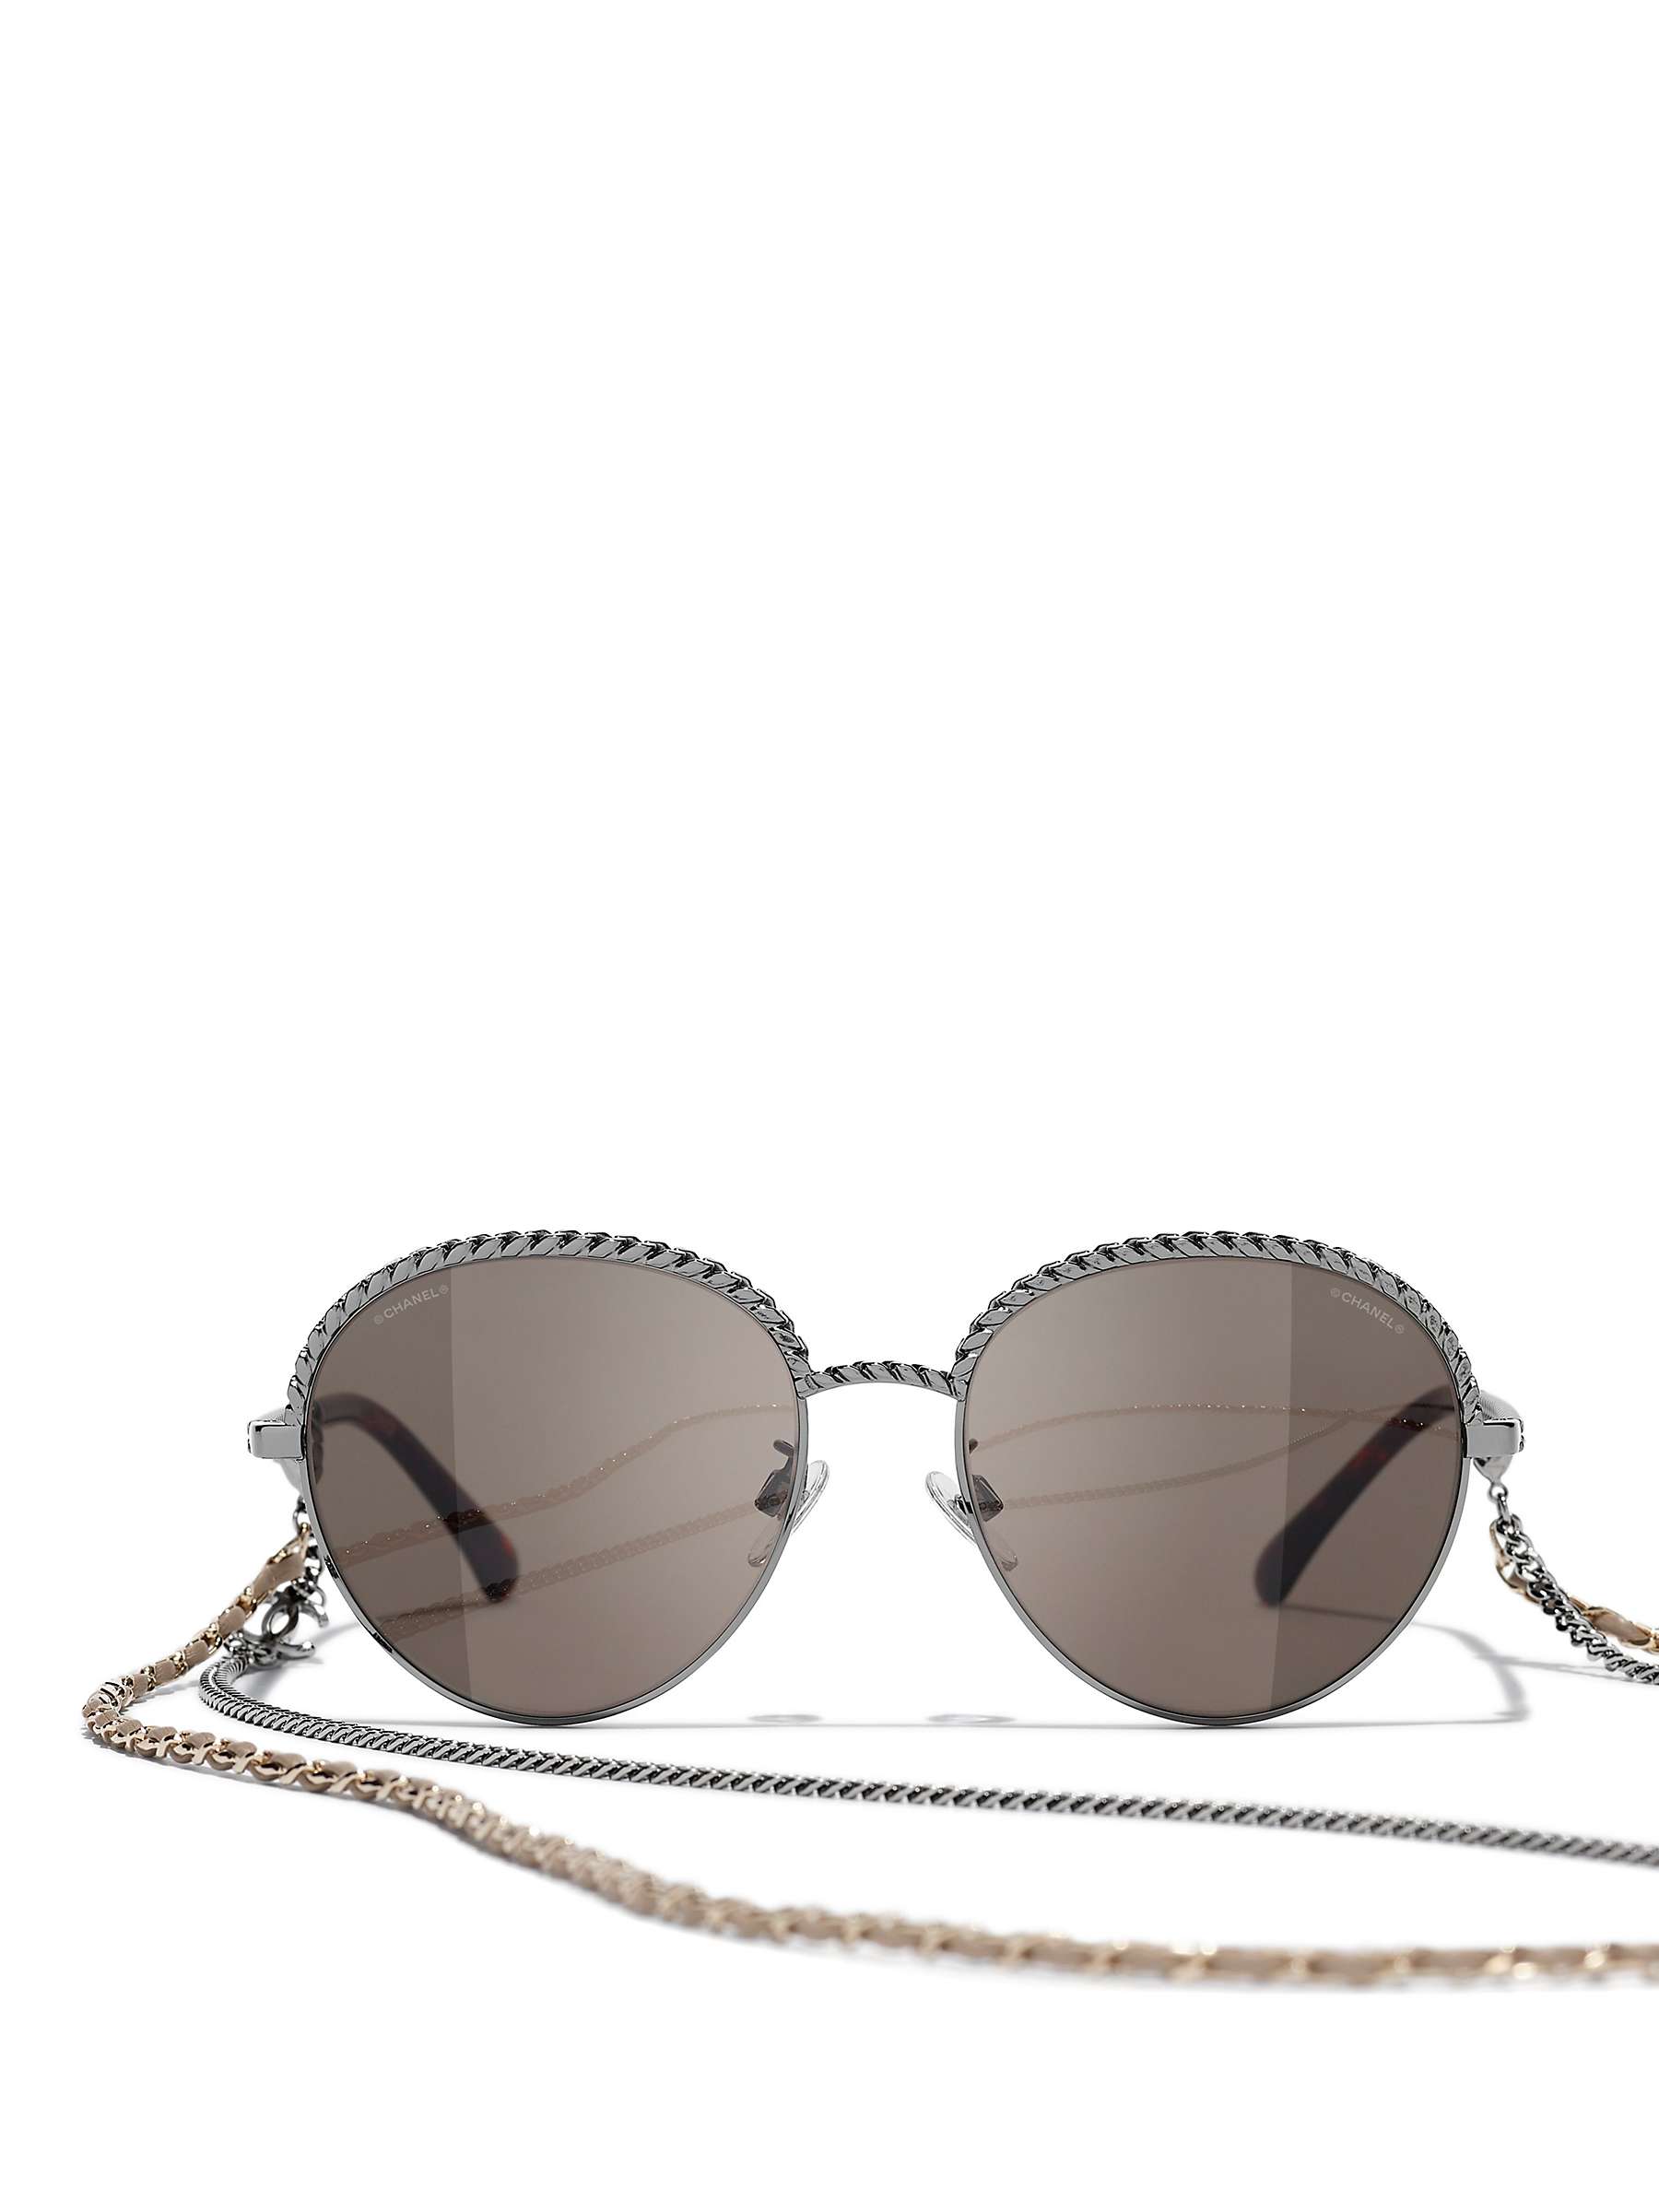 Buy CHANEL Oval Sunglasses CH4242 Gunmetal/Grey Online at johnlewis.com